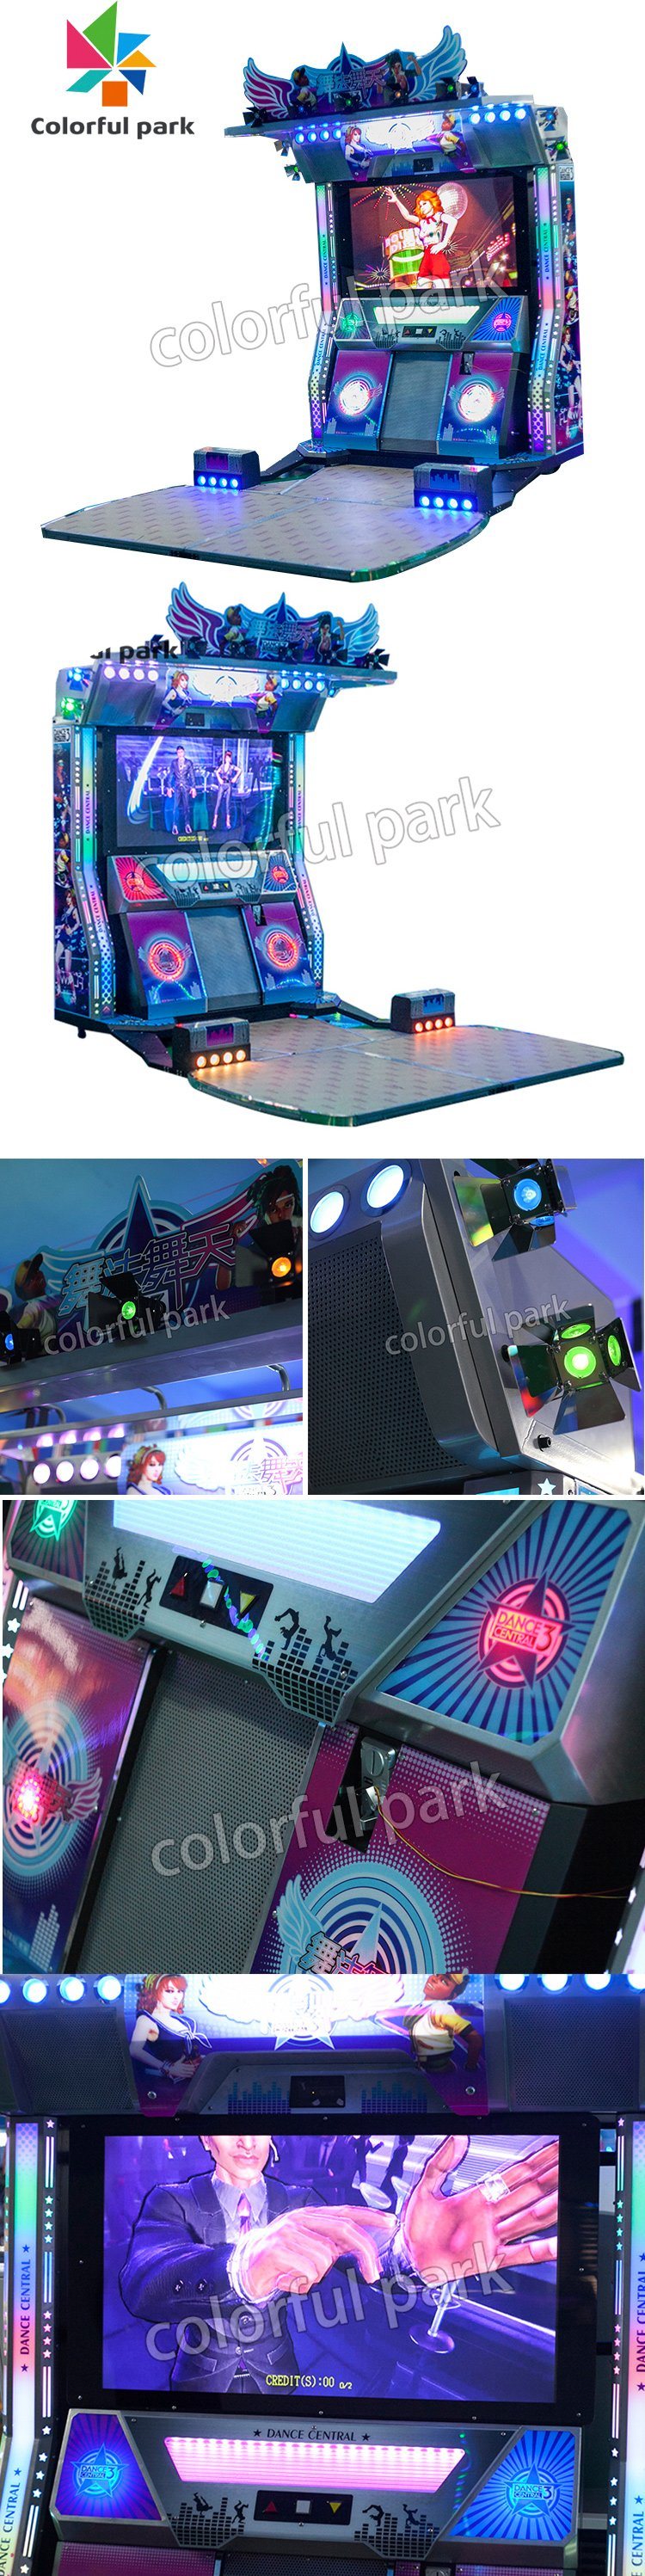 Colorful Park Dancing Machine Game Skiing Game Machine Arcade Danz Base Dancing Game Machine